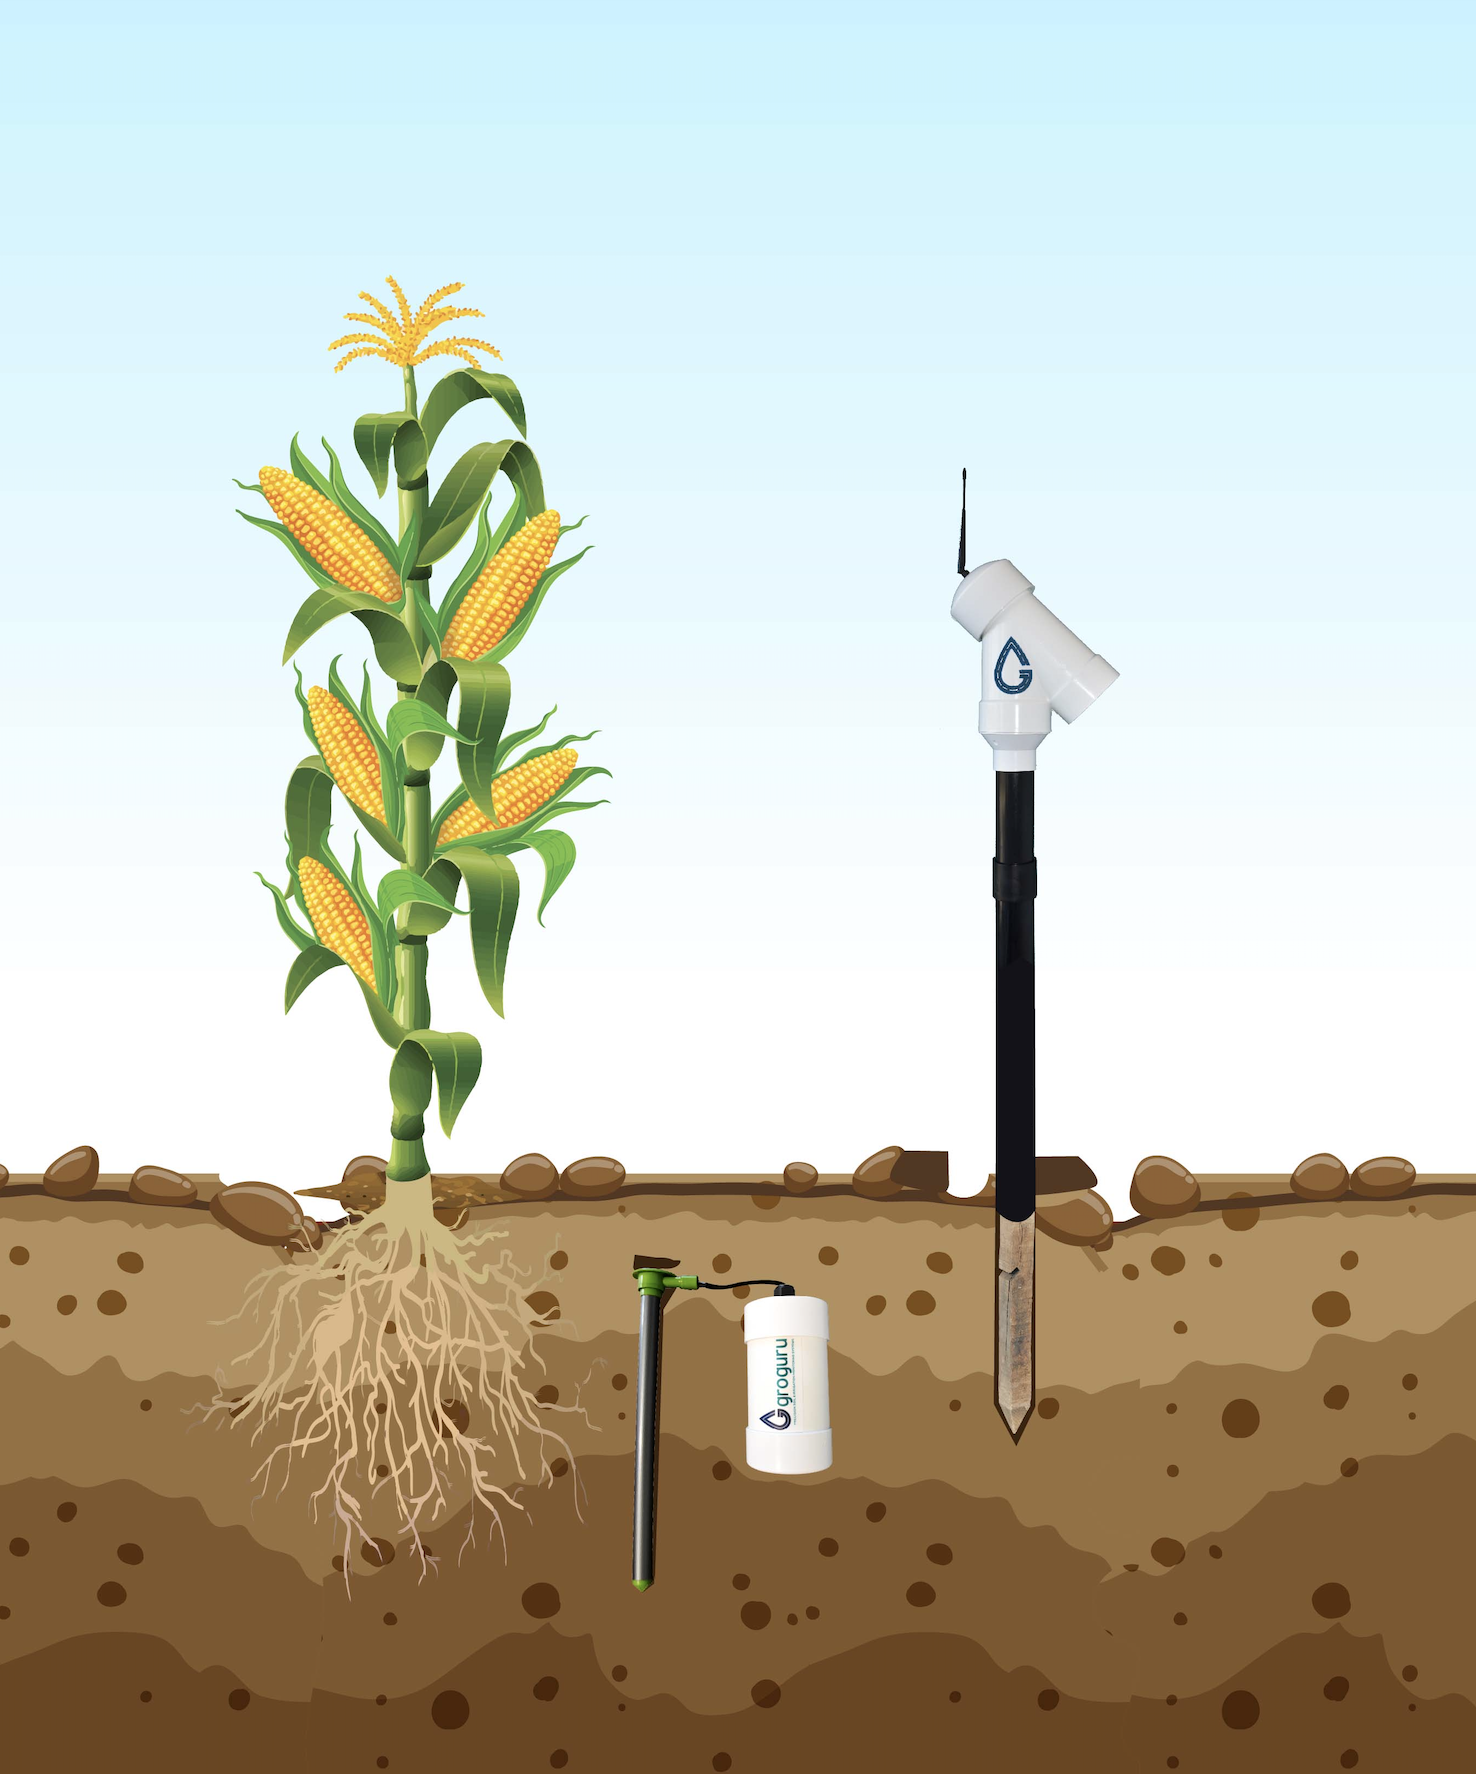 GroGuru Wireless Underground (WUGS) Precision Soil Monitoring Solution